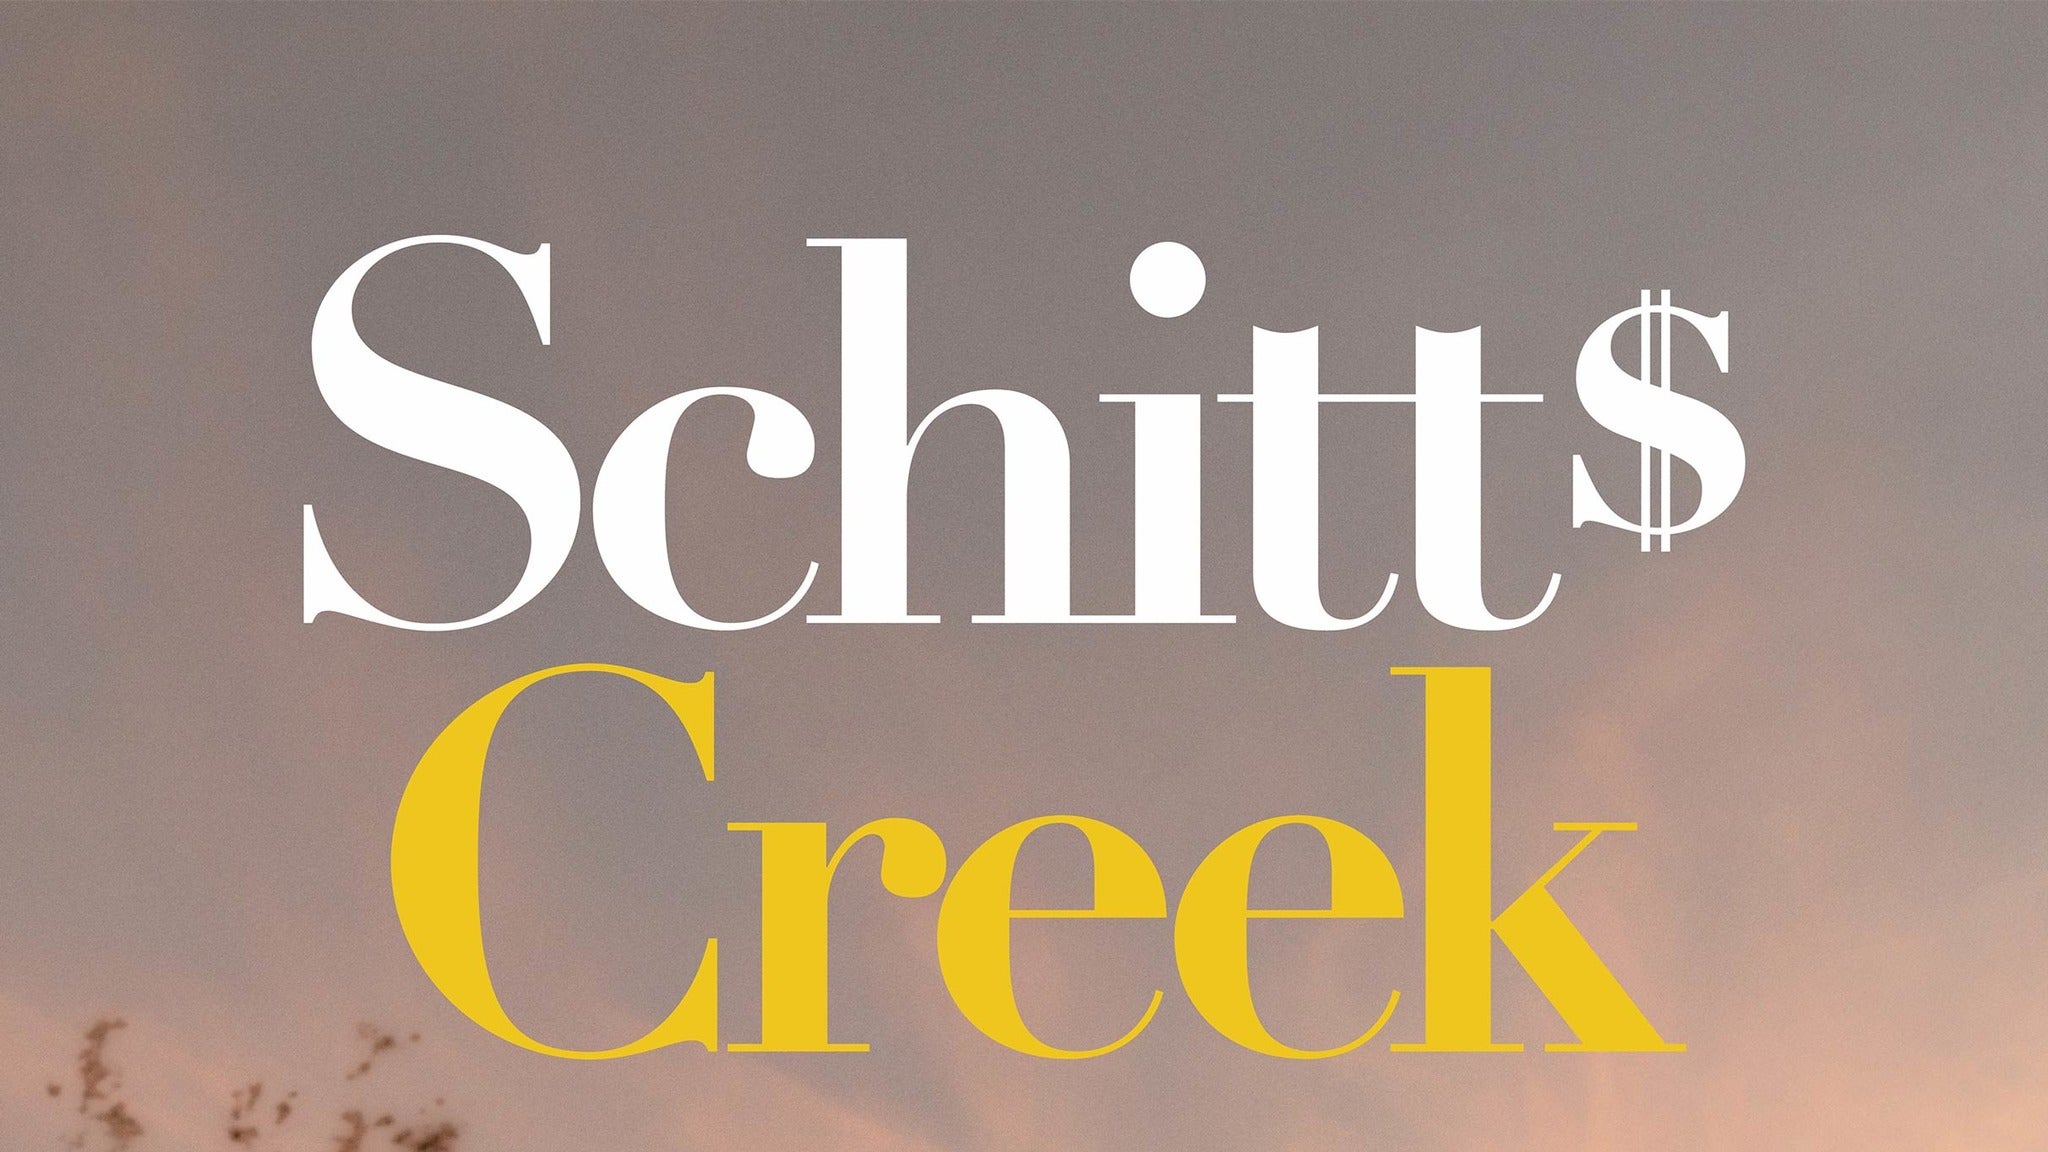 Schitt's Creek: The Farewell Tour in National Harbor  promo photo for Live Nation Mobile App presale offer code